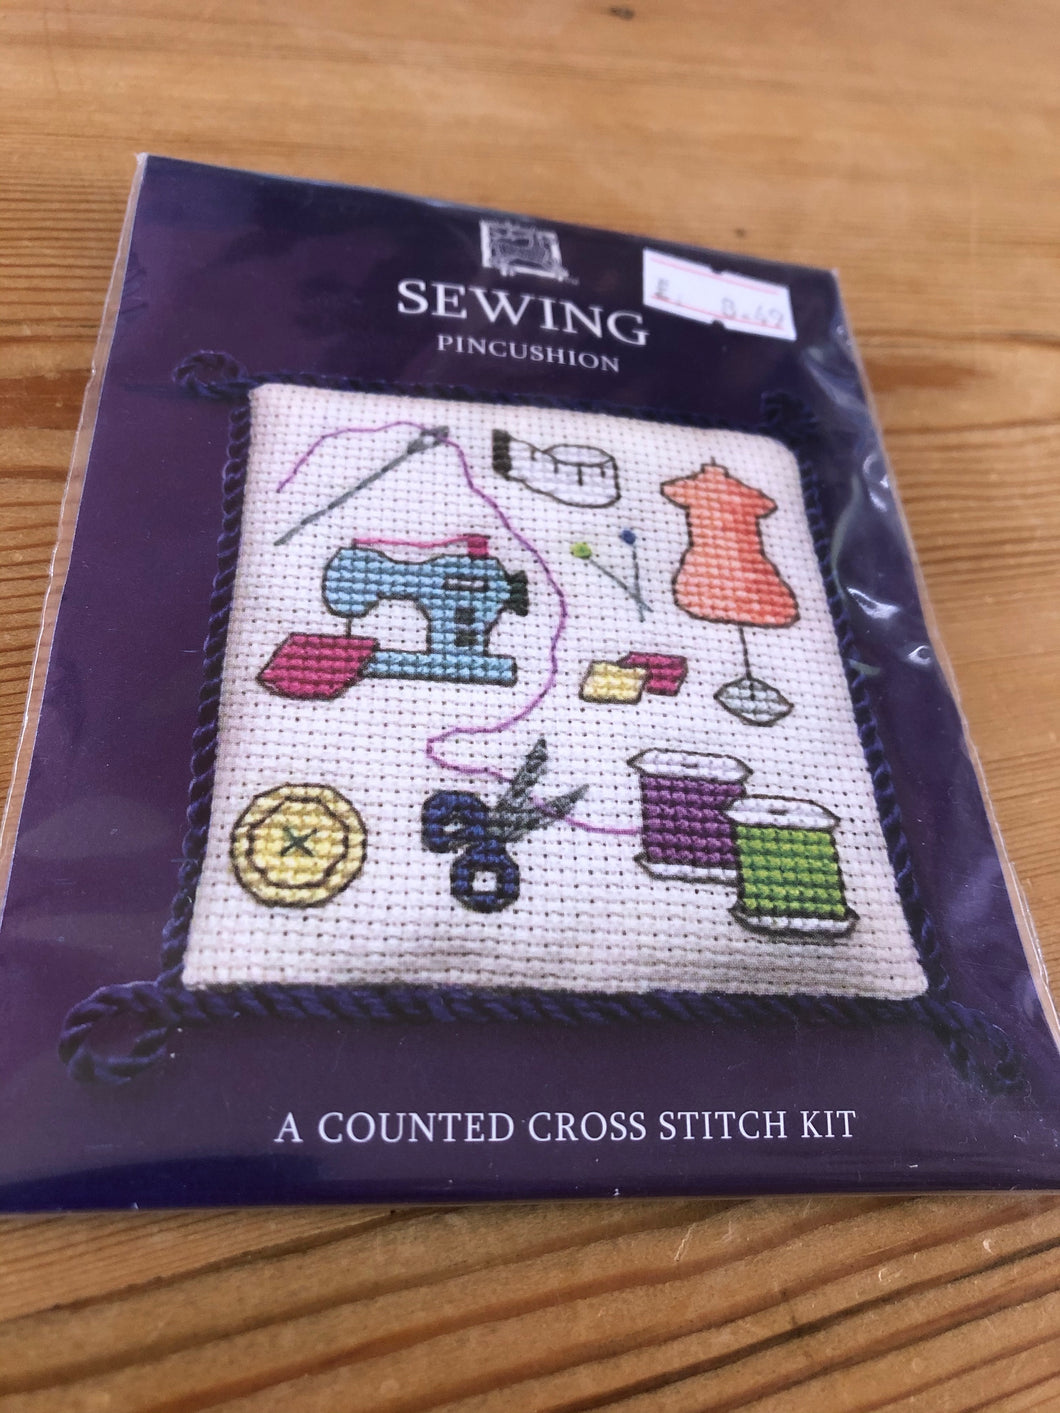 Cross stitch kit - sewing themed pin cushion